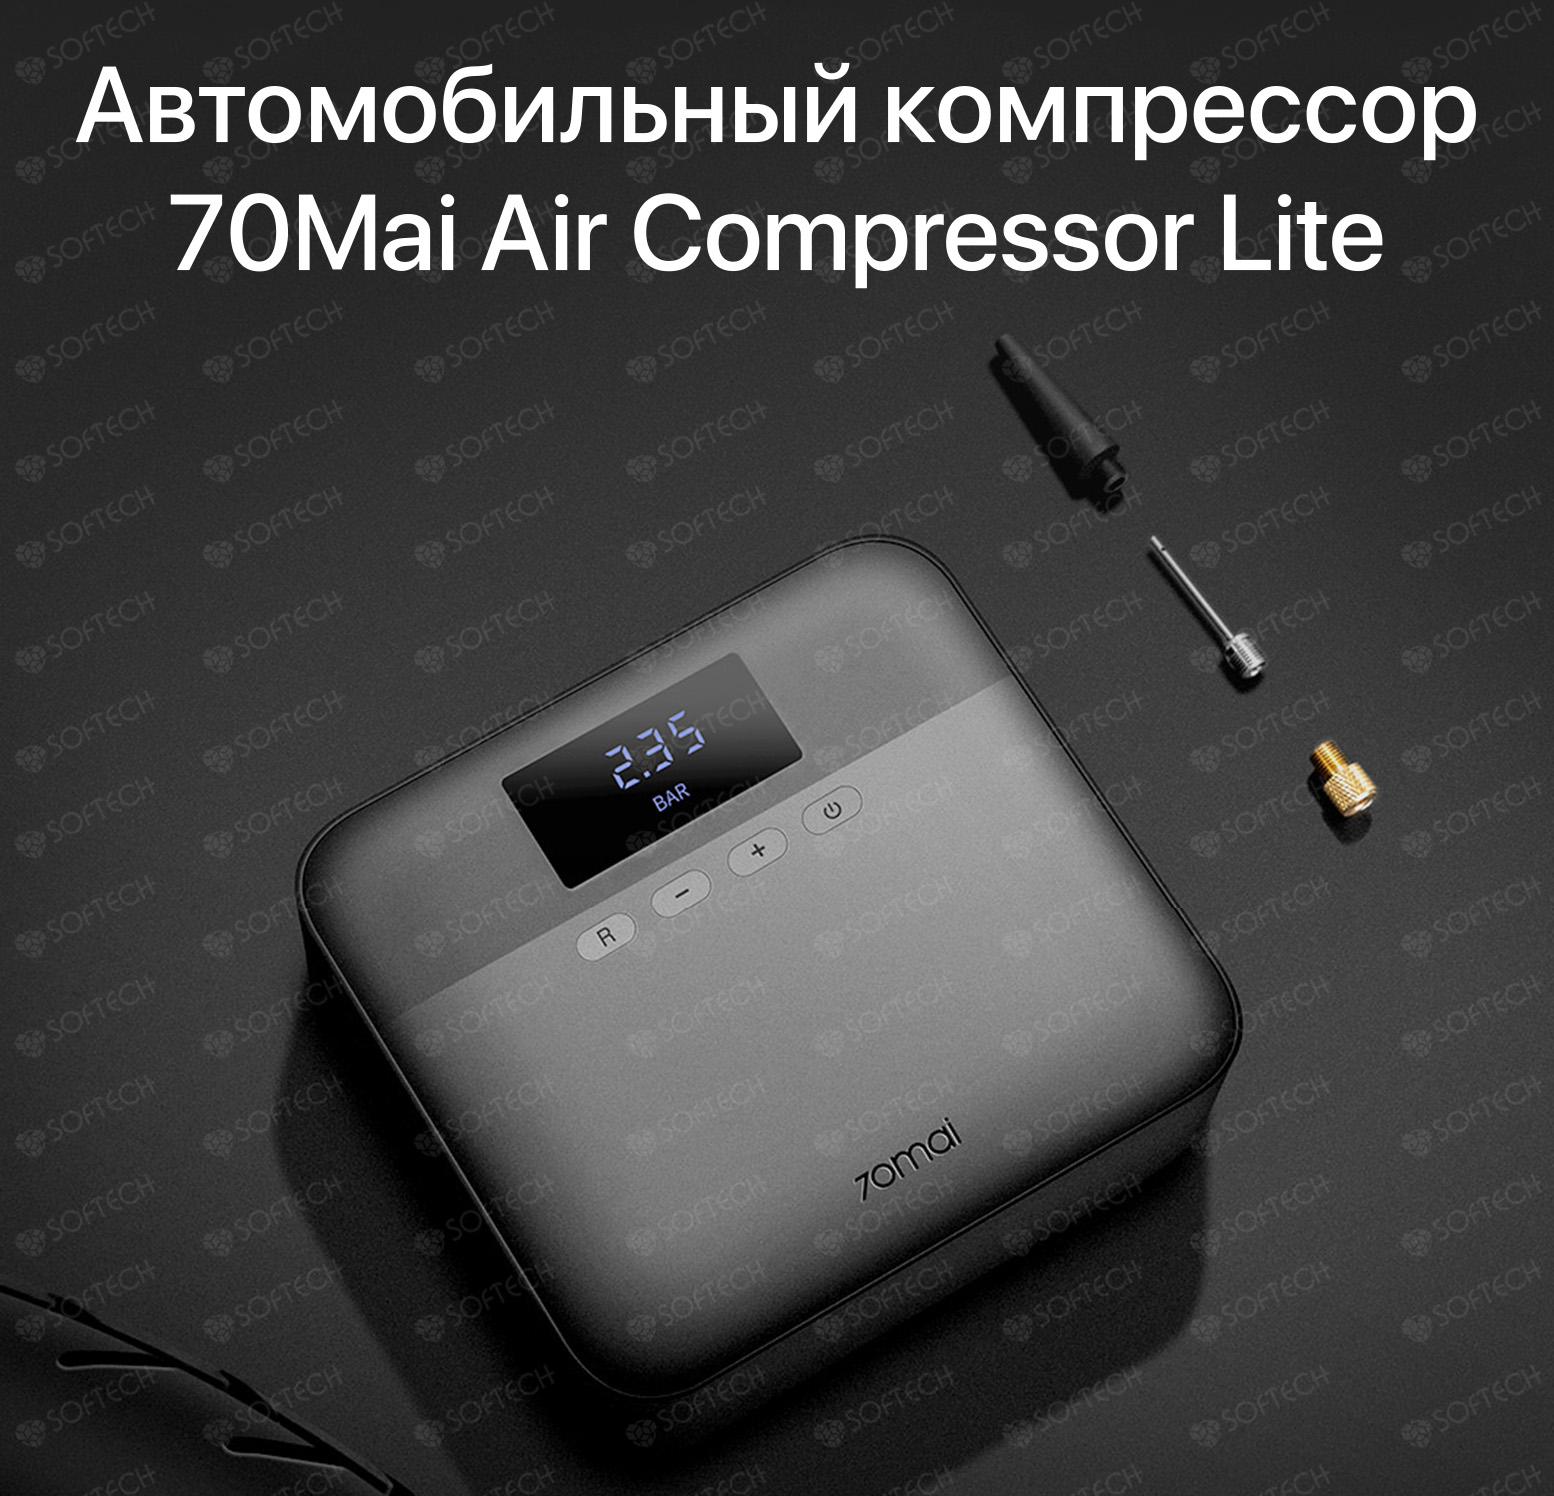 70mai air compressor midrive tp03